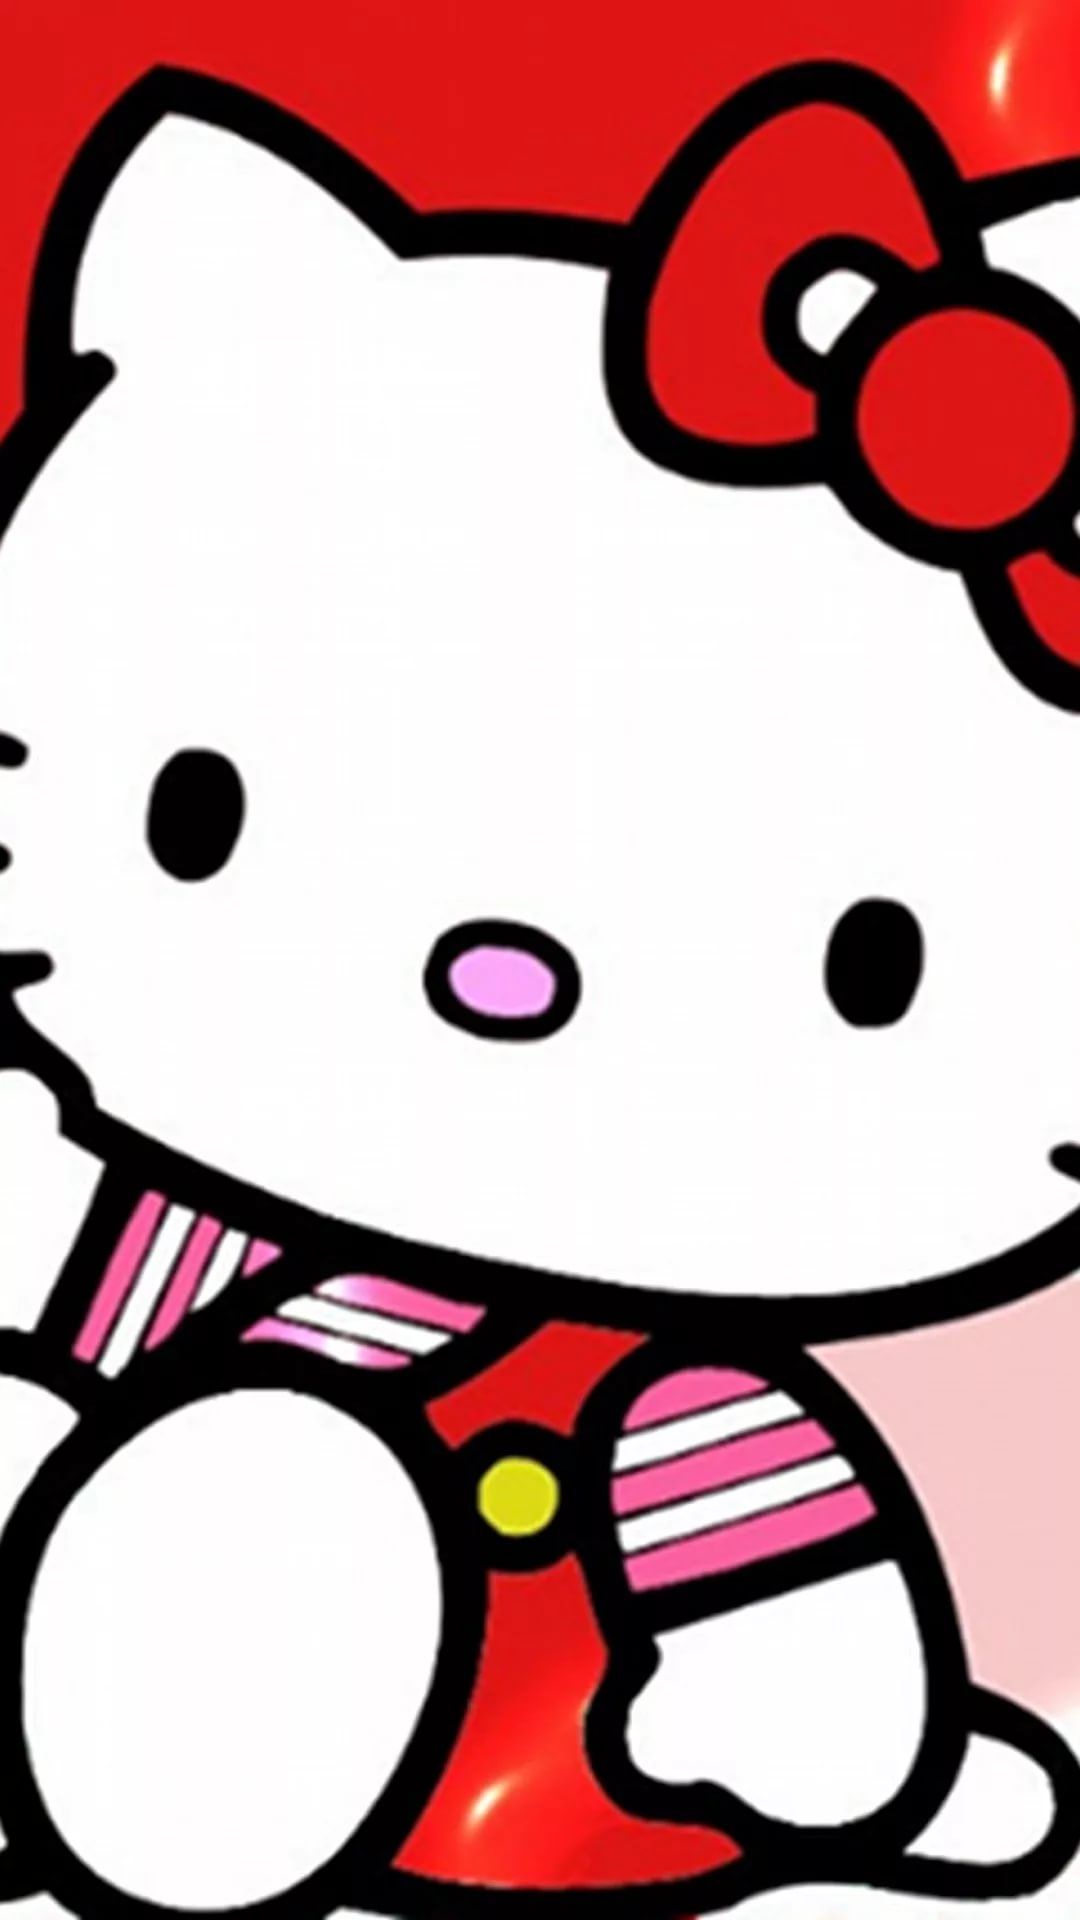 Cute Hello Kitty Cell Phone wallpaper